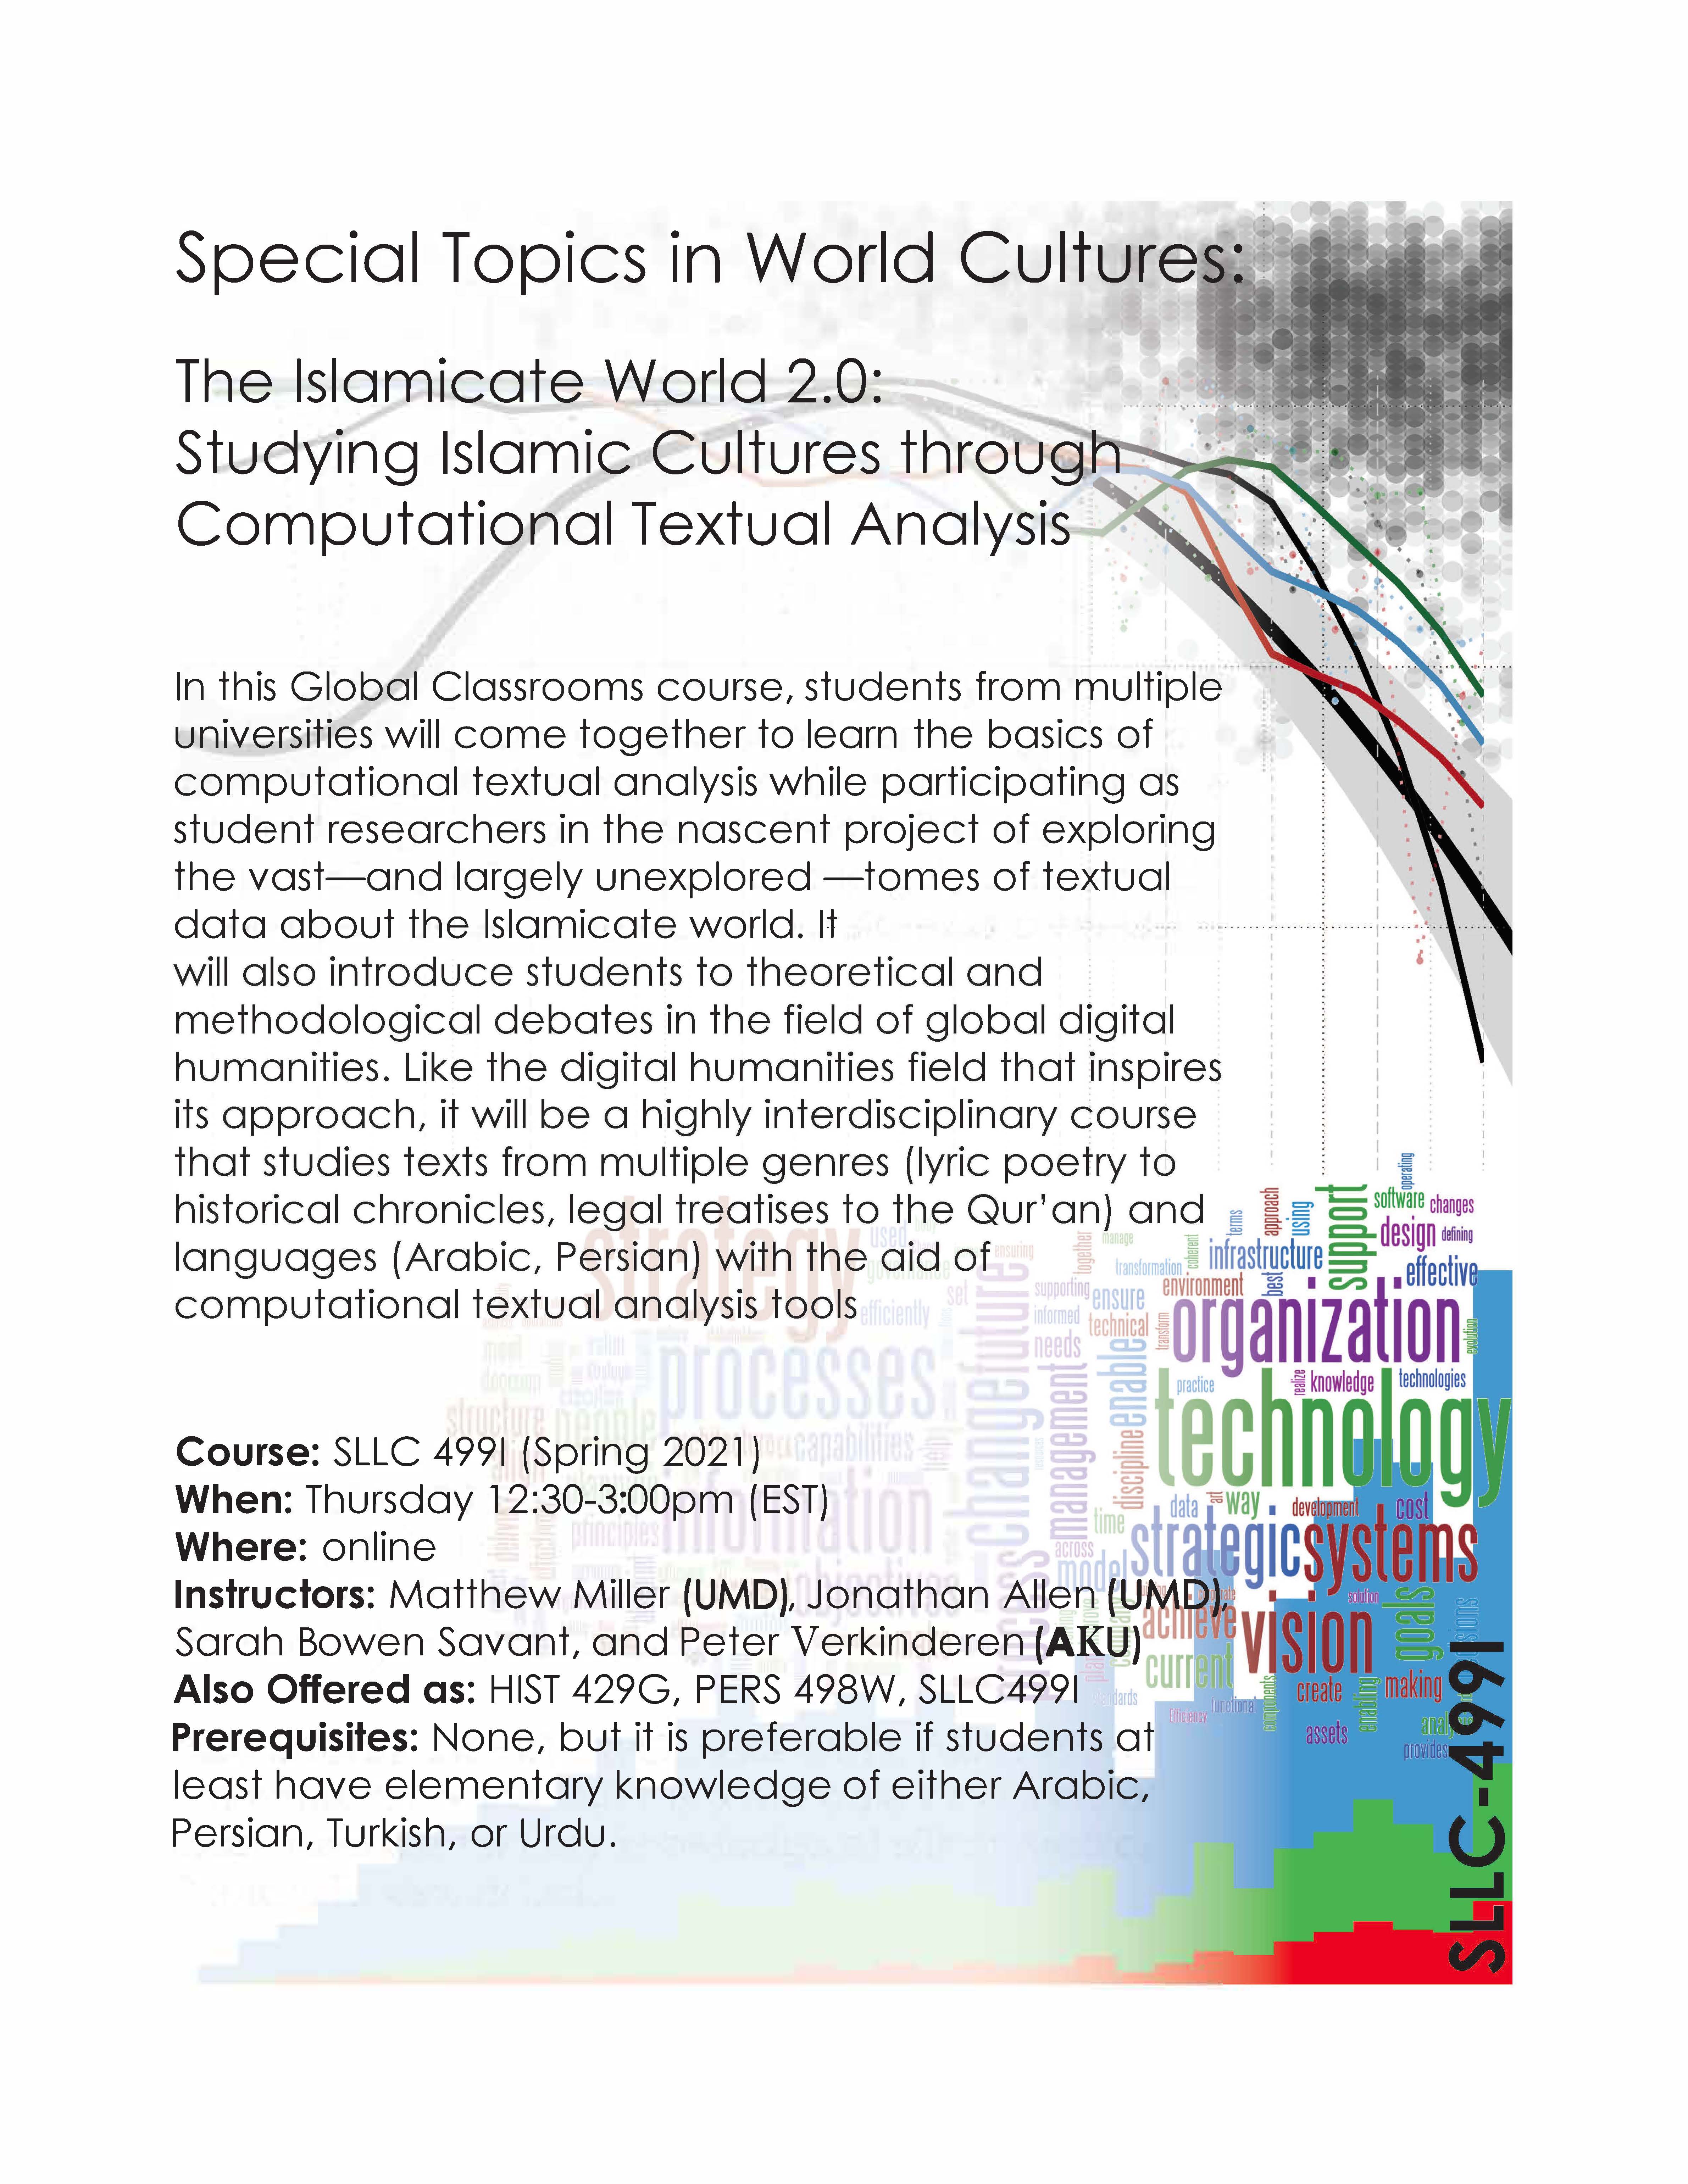 The Islamicate World 2.0: Studying Islamic Cultures through Computational Textual Analysis, taught by Matthew Thomas Miller, Sarah Bowen Savant, Peter Verkinderen, and Jonathan Allen